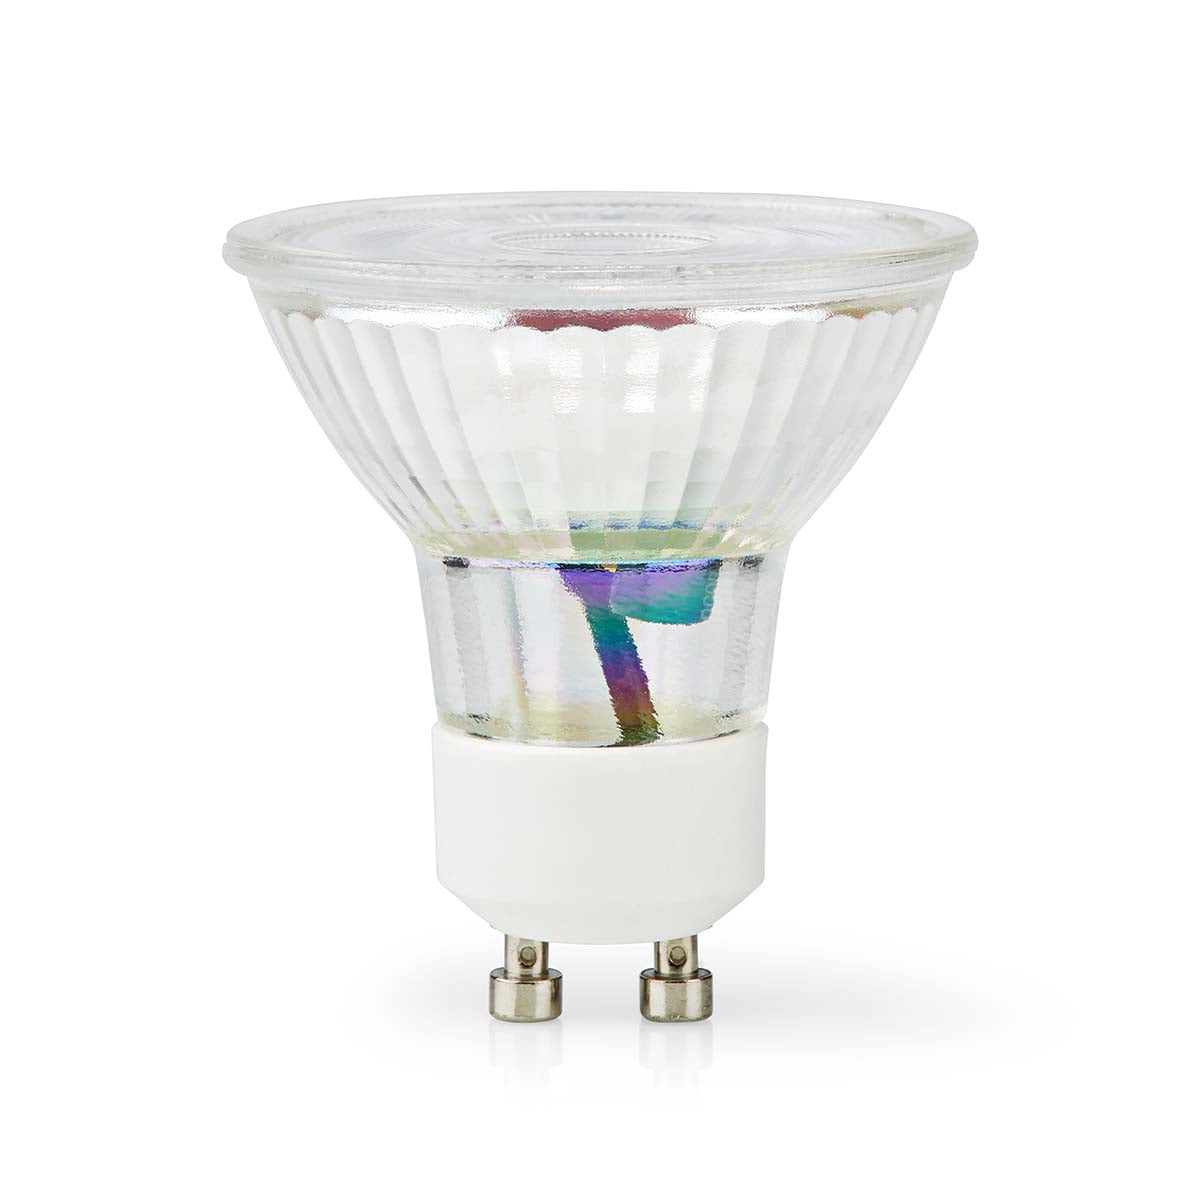 LED-Lampe GU10 | Spot | 3 W | 230 lm | 2700 K | Warmweiss | Retro Style | 1 Stück